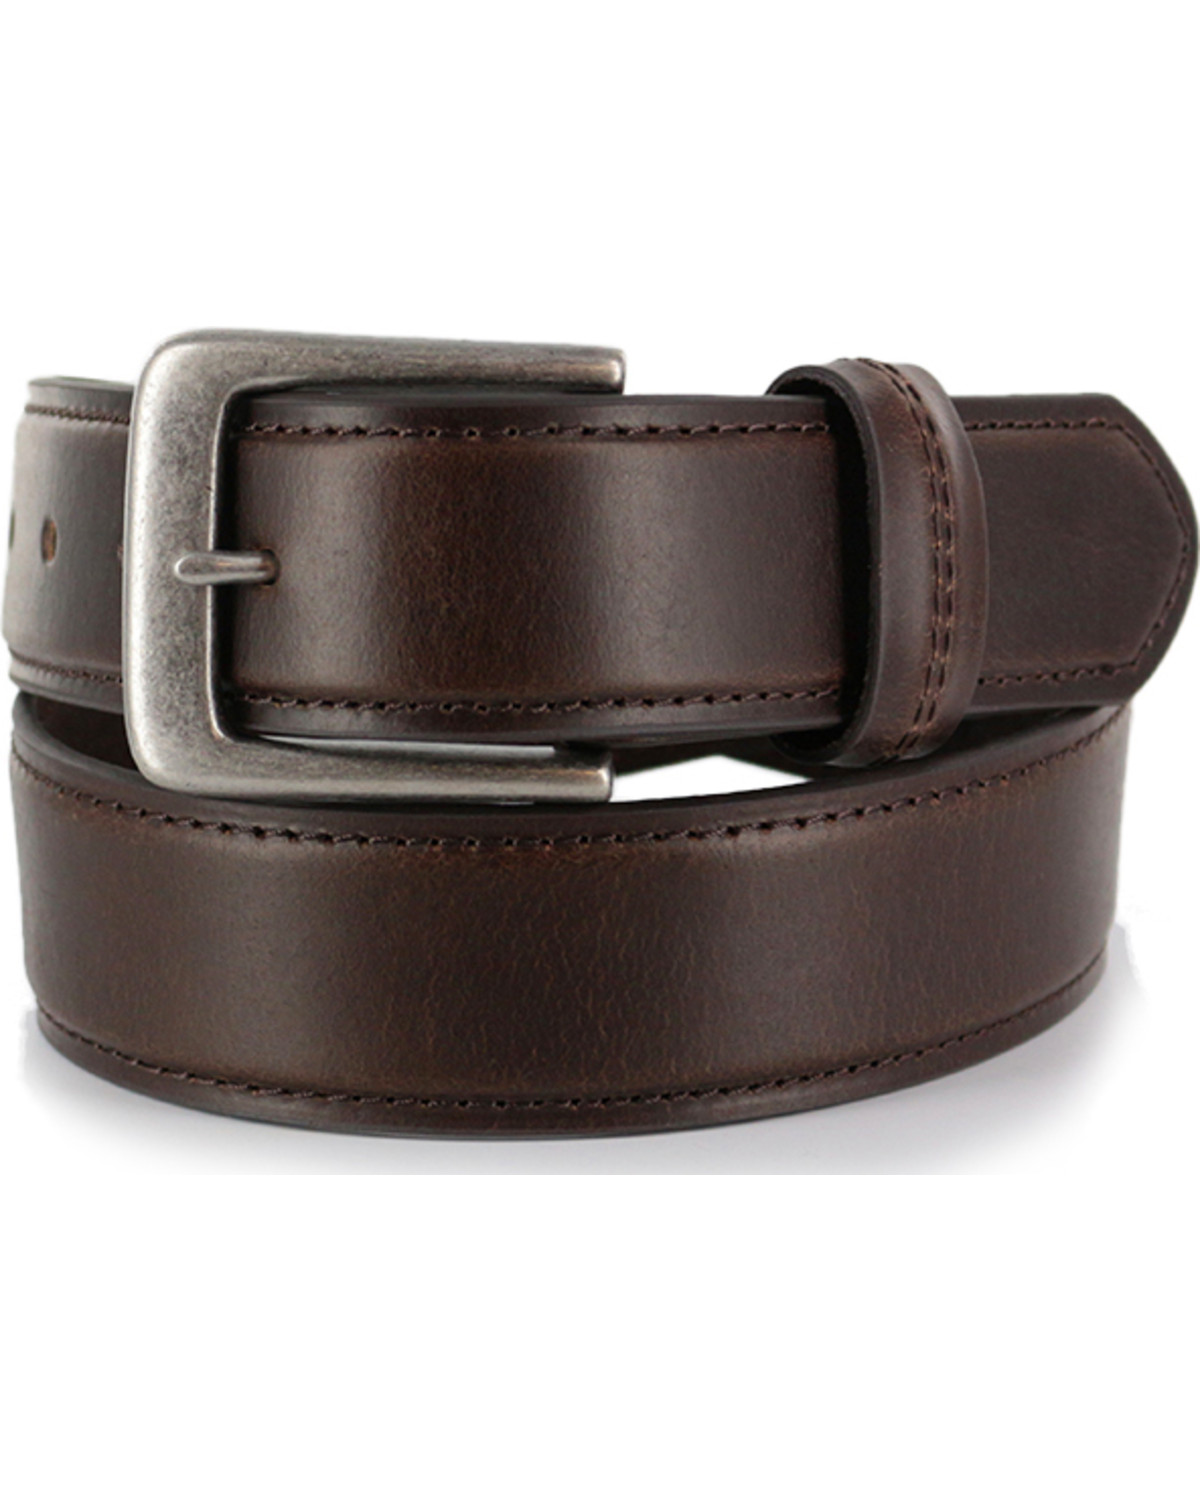 American Worker Men's Brown Leather Belt